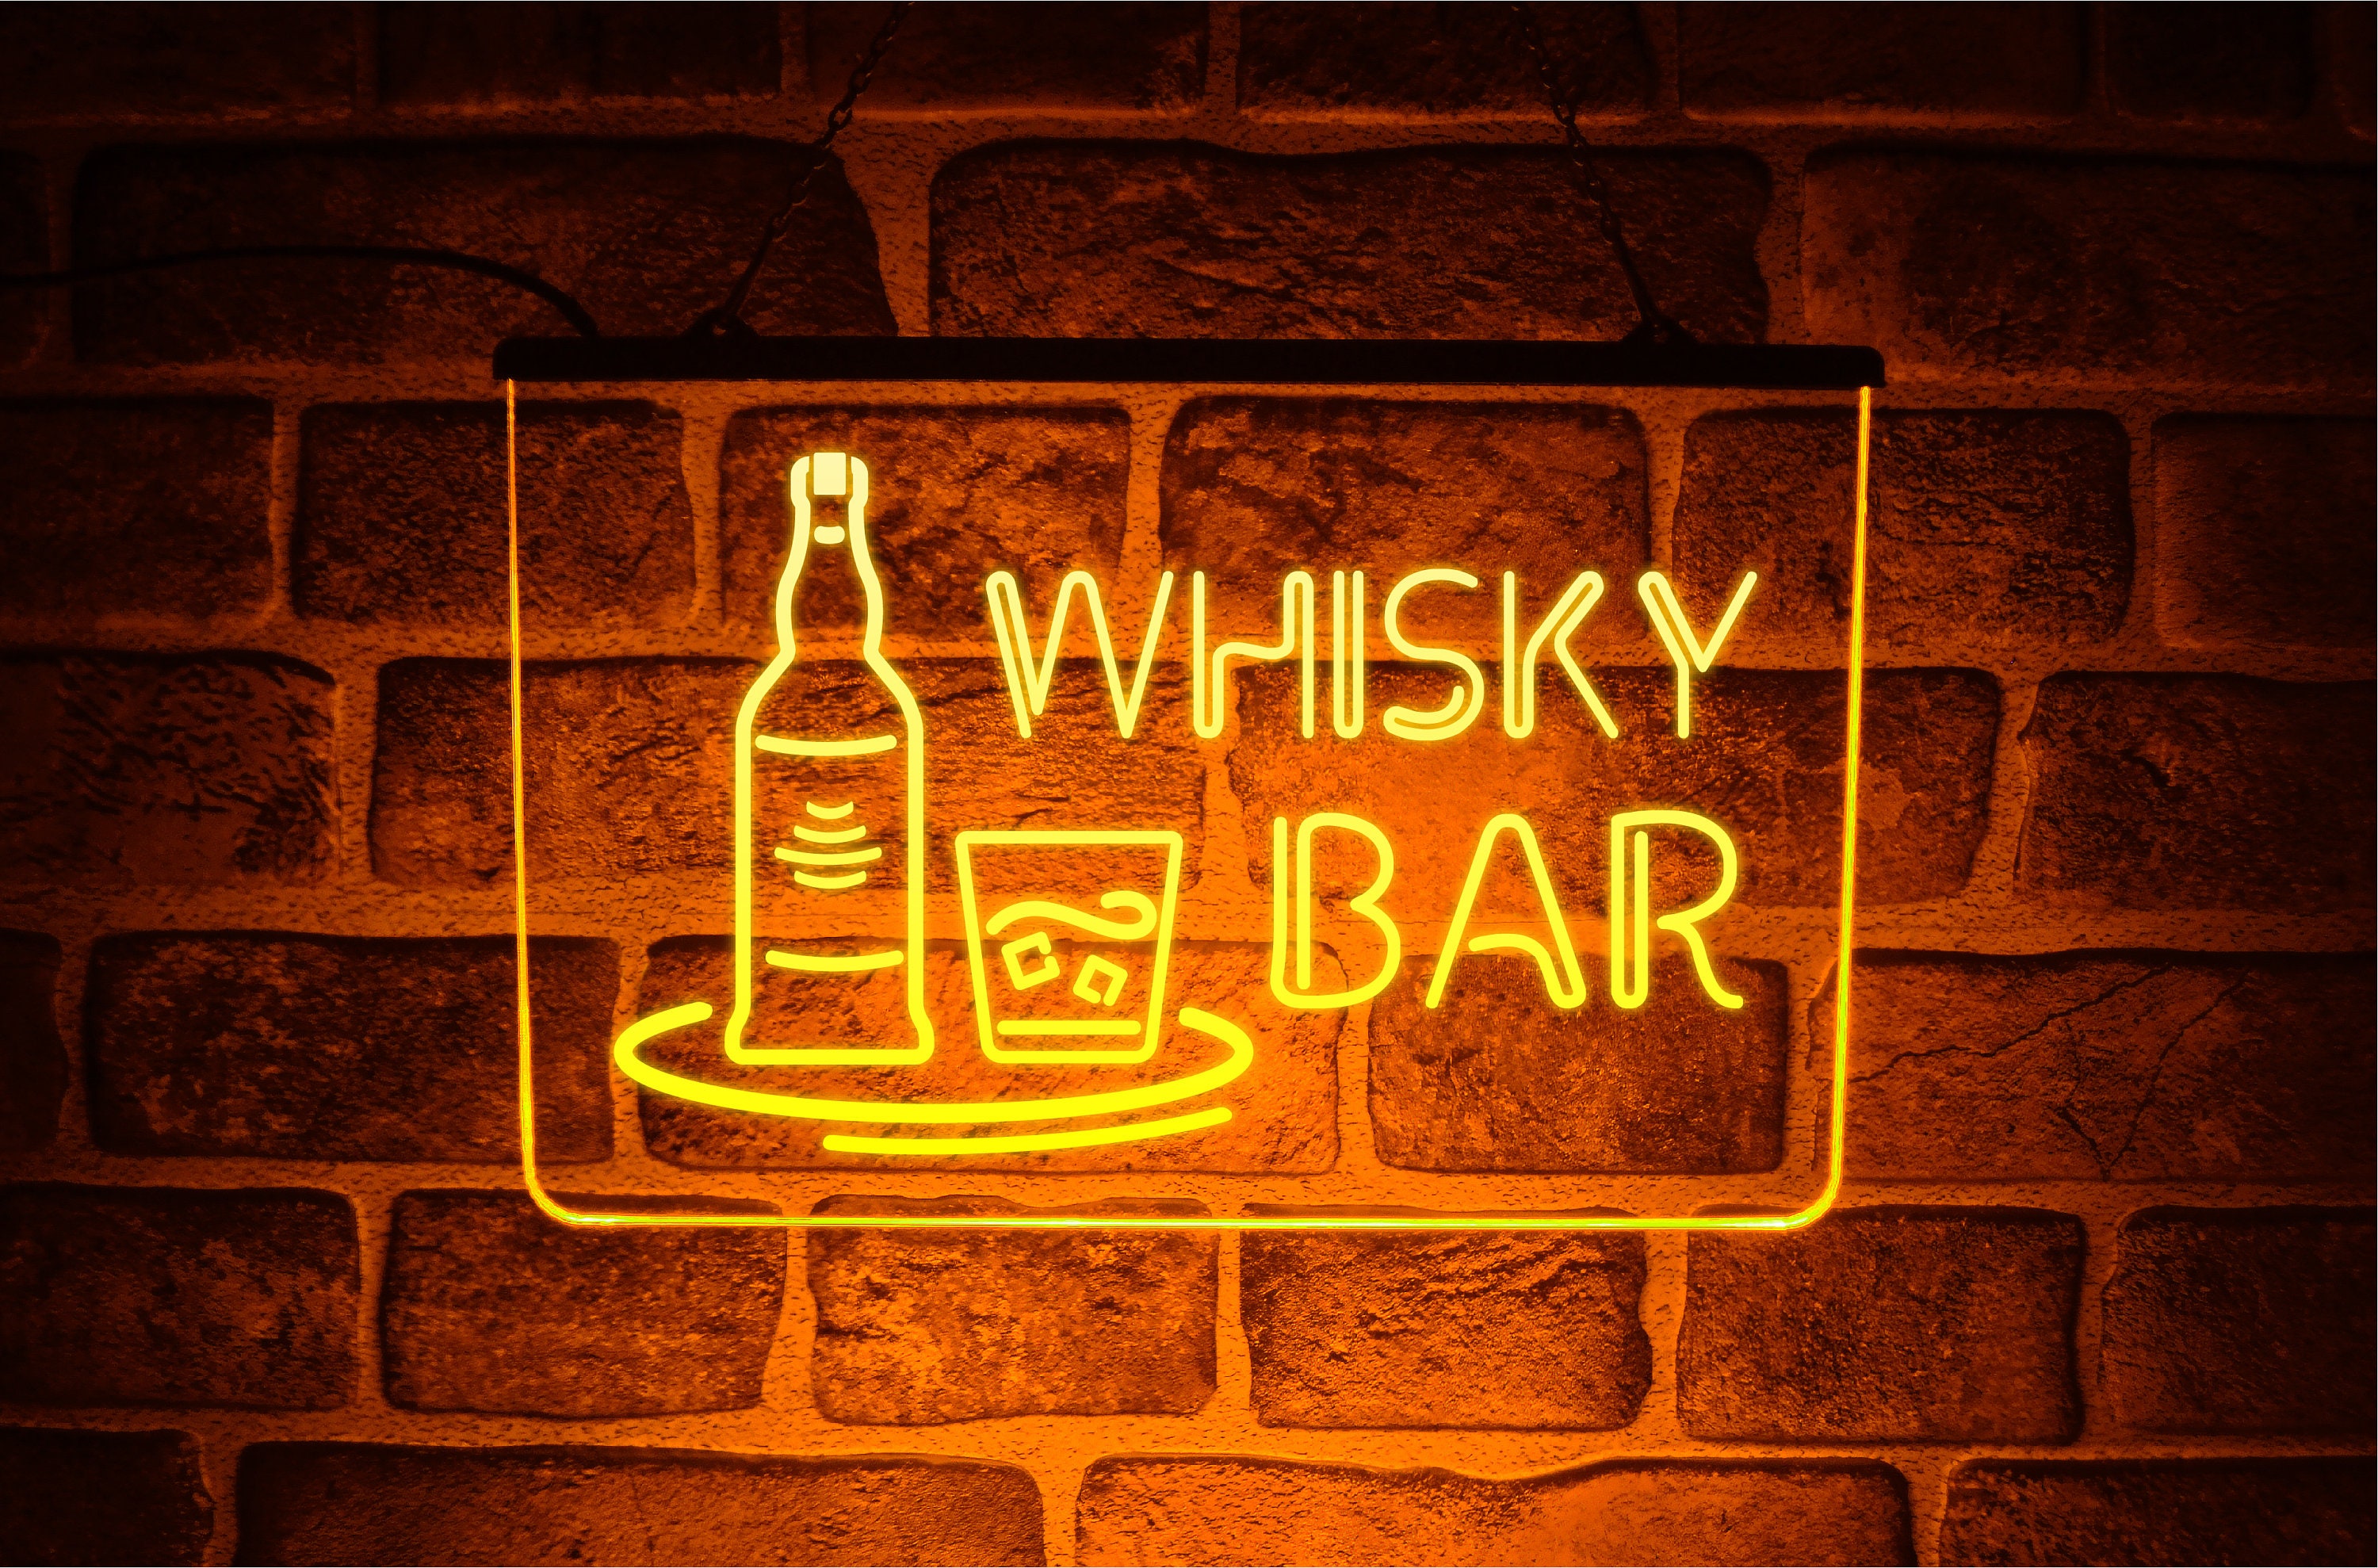 Vintage bar schild beleuchtet